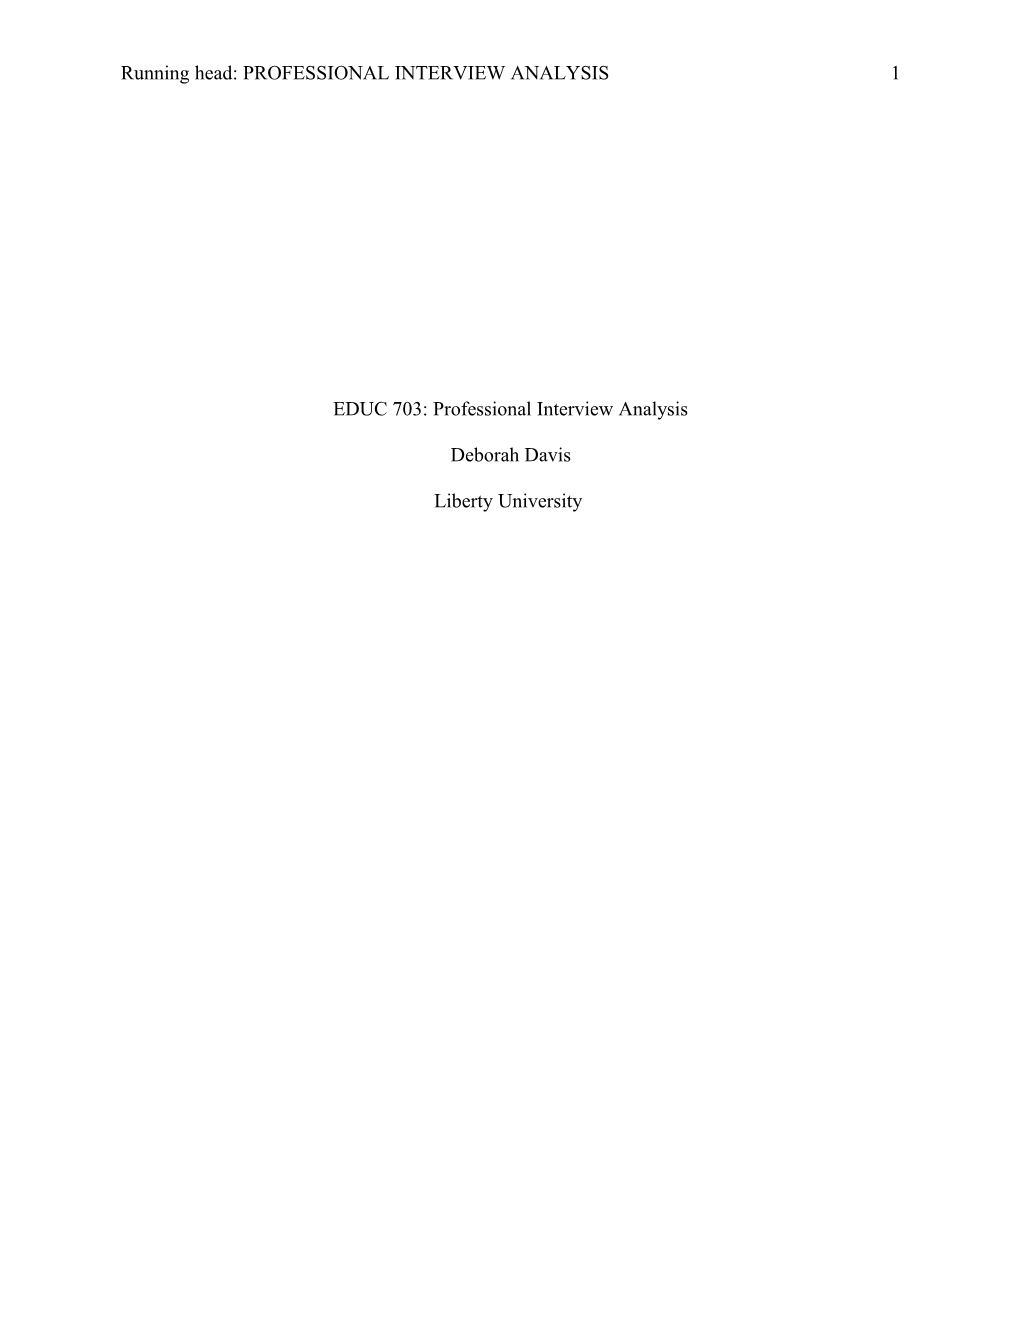 EDUC 703: Professional Interview Analysis